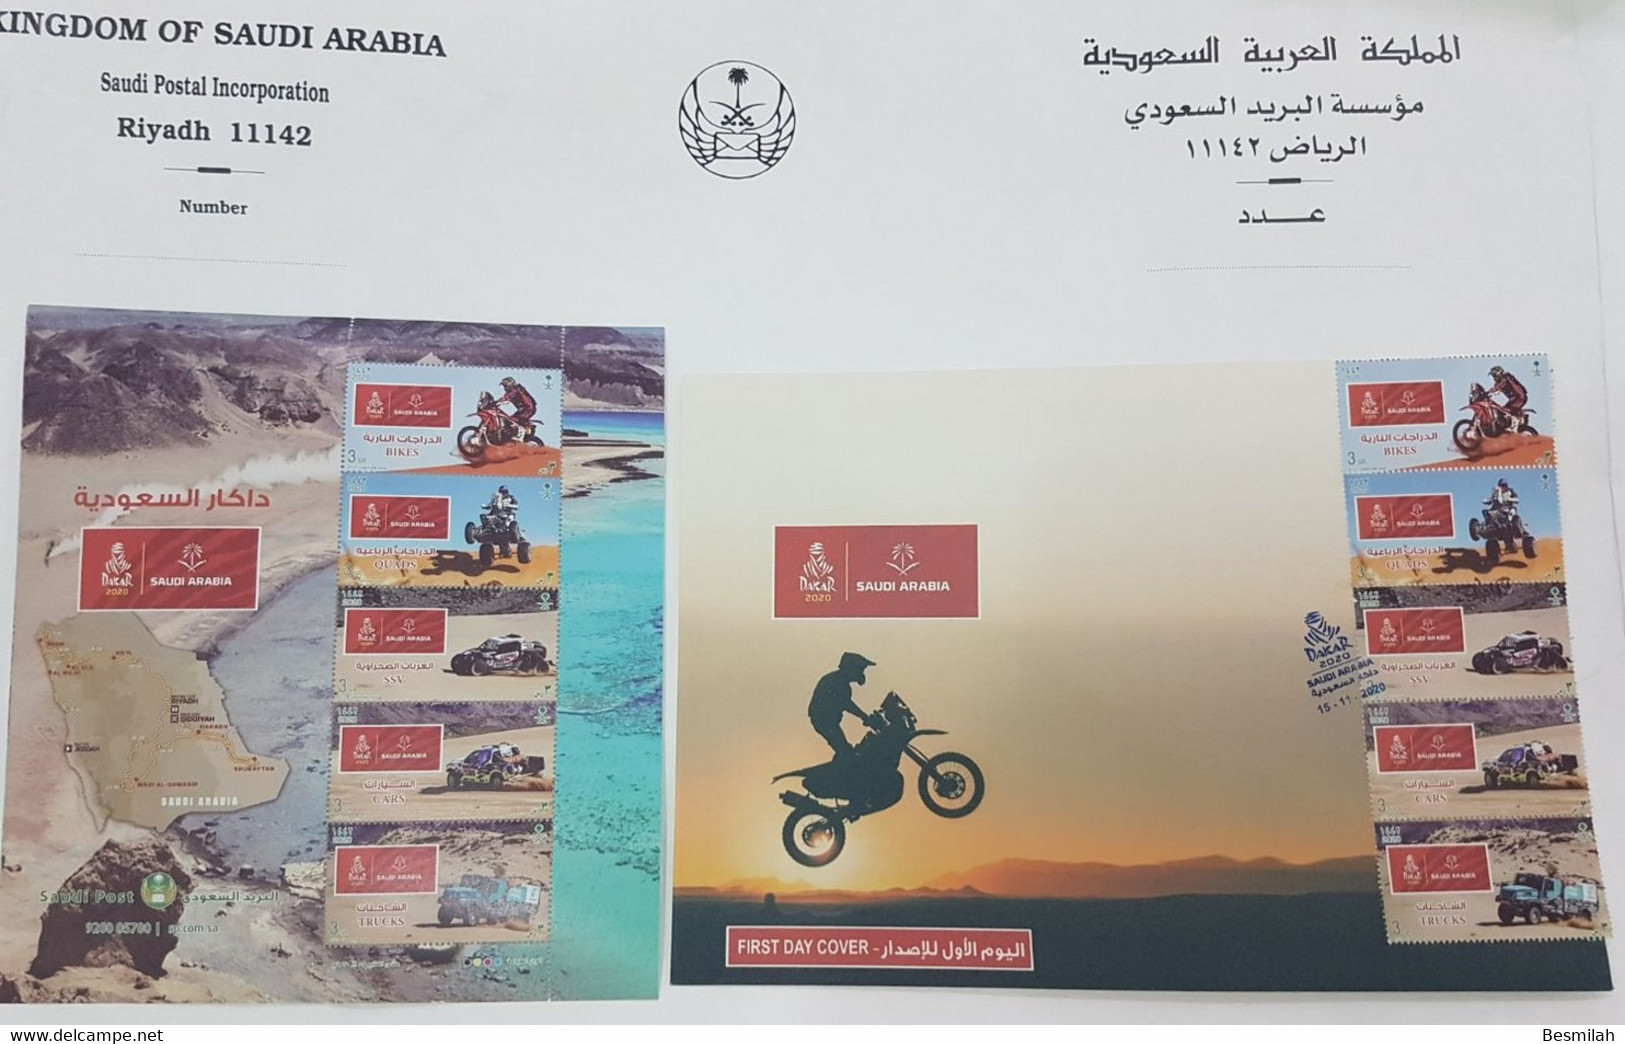 Saudi Arabia Stamp Dakar Race 2020 (1442 Hijry) 10 Pieces Of 3 Riyals Full Sheet + FDVC+ Card And Brochure - Arabie Saoudite